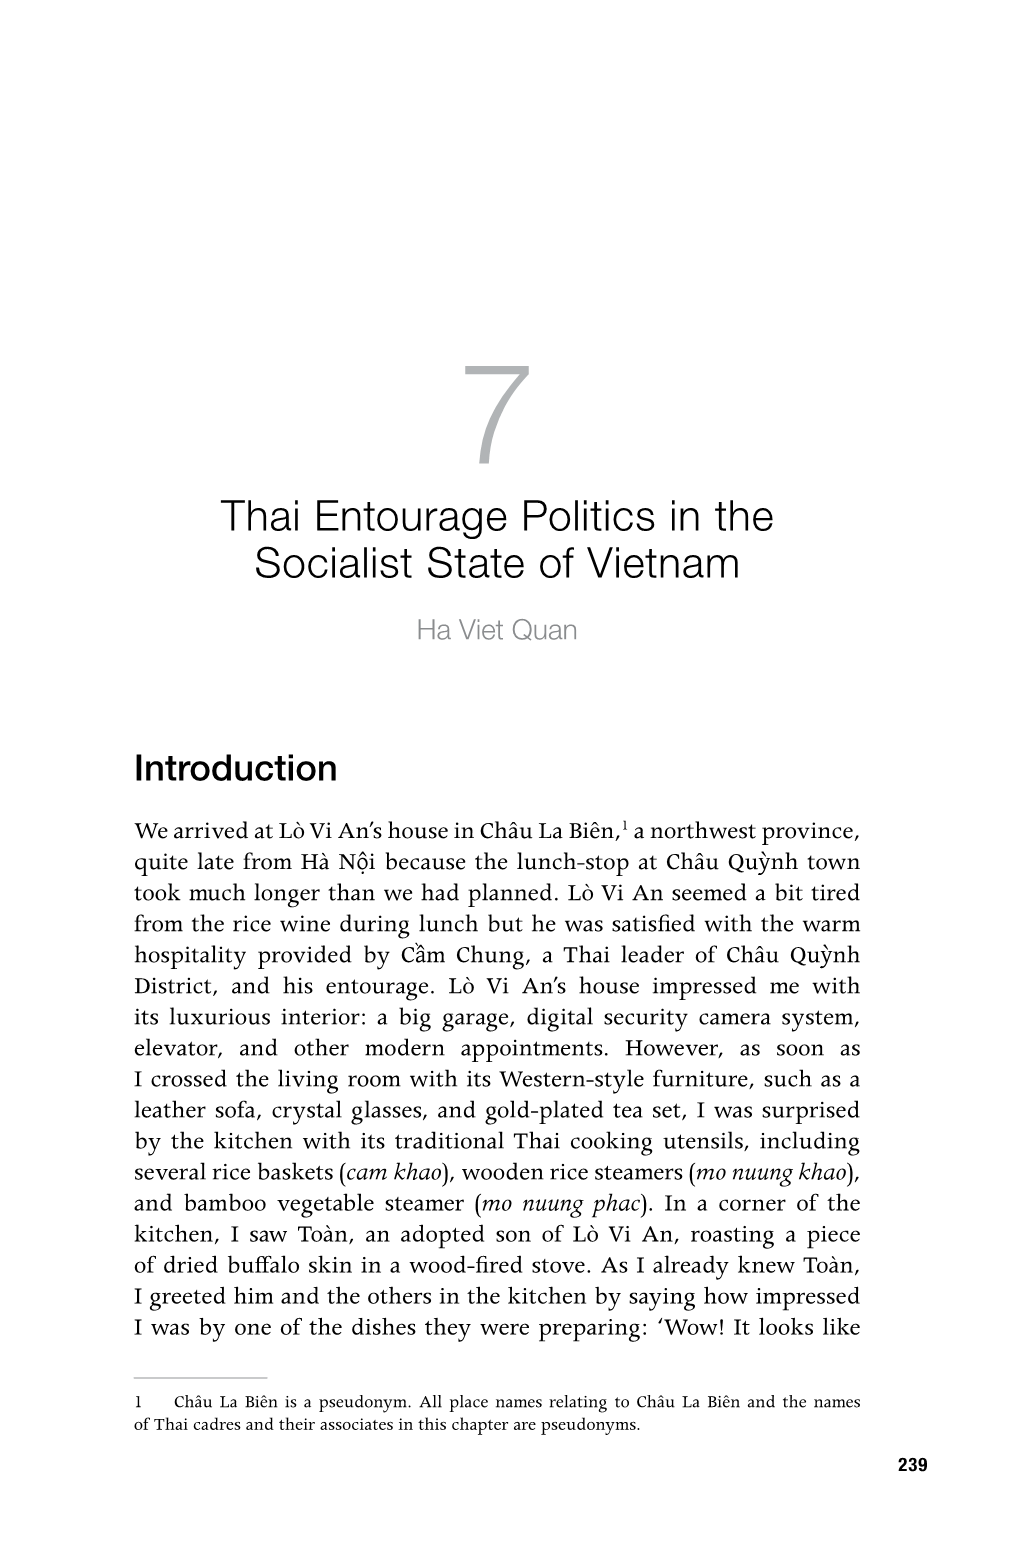 Thai Entourage Politics in the Socialist State of Vietnam